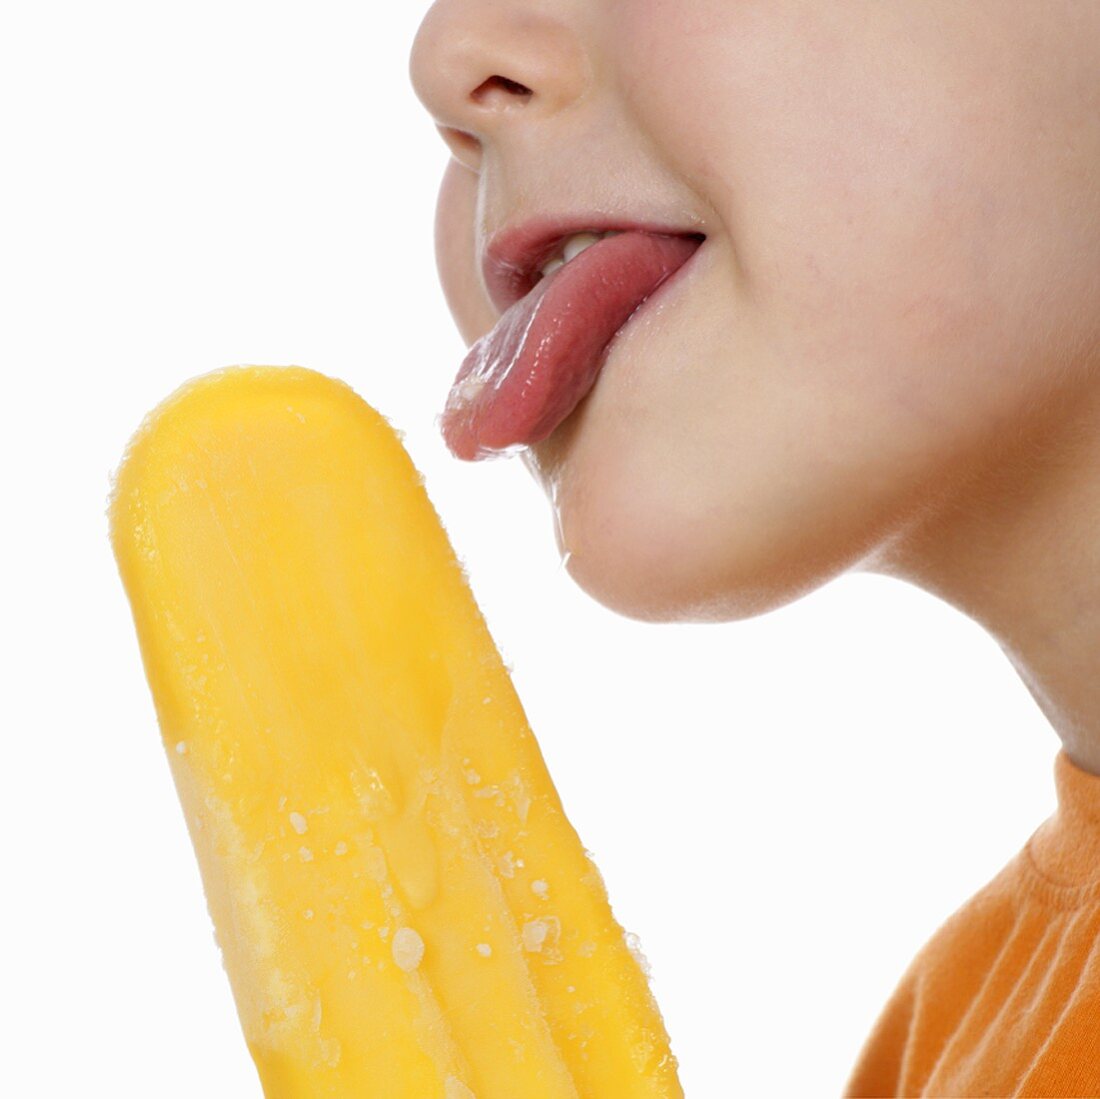 Boy licking an orange ice lolly